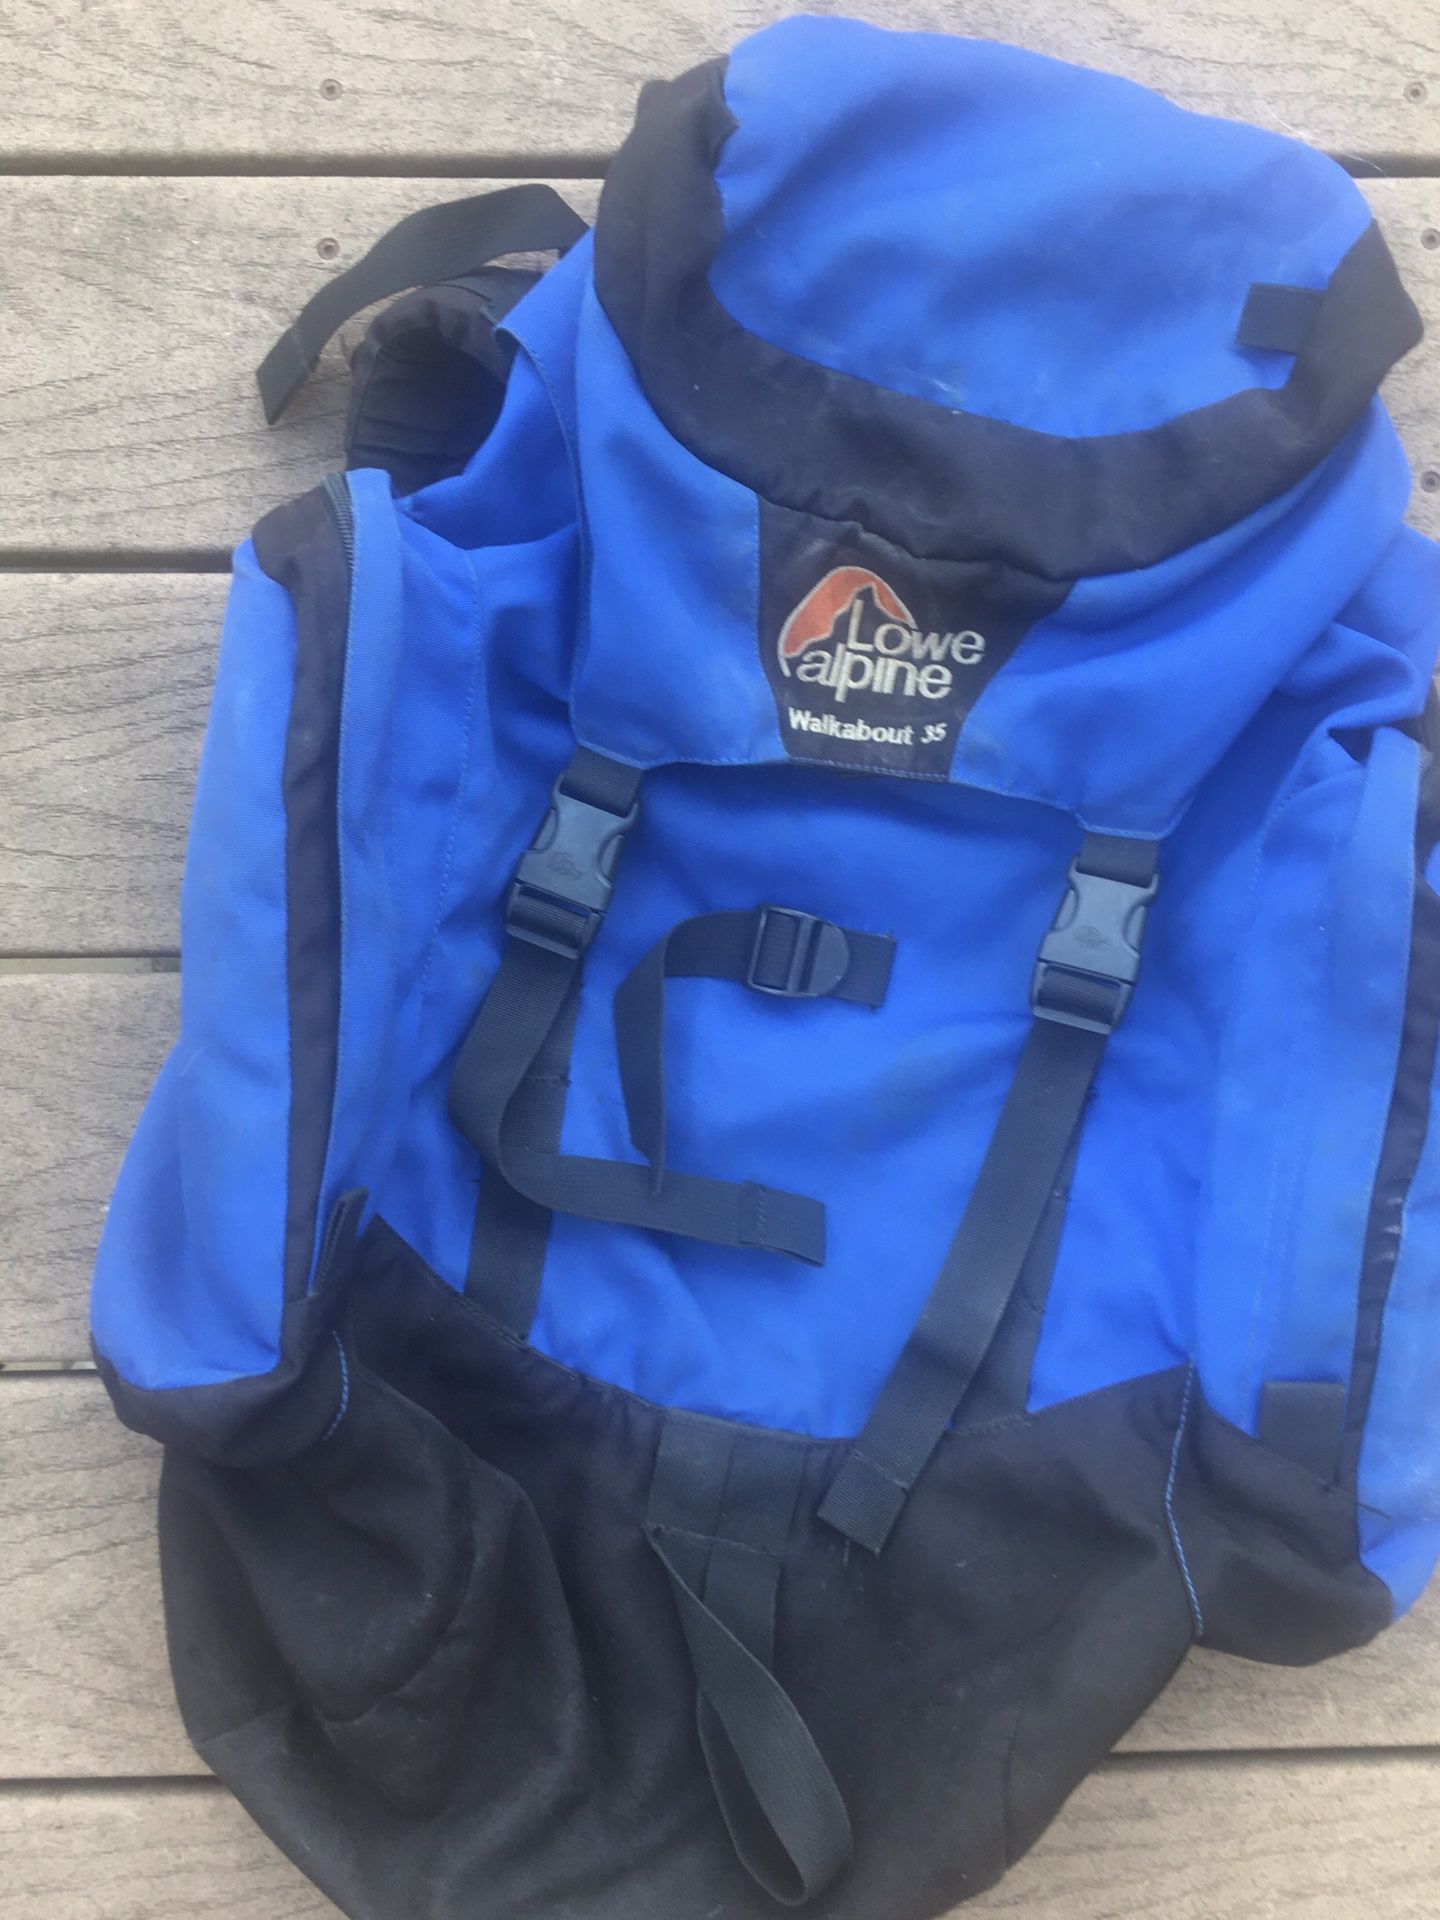 Lowe Alpine Walkabout 35 backpack